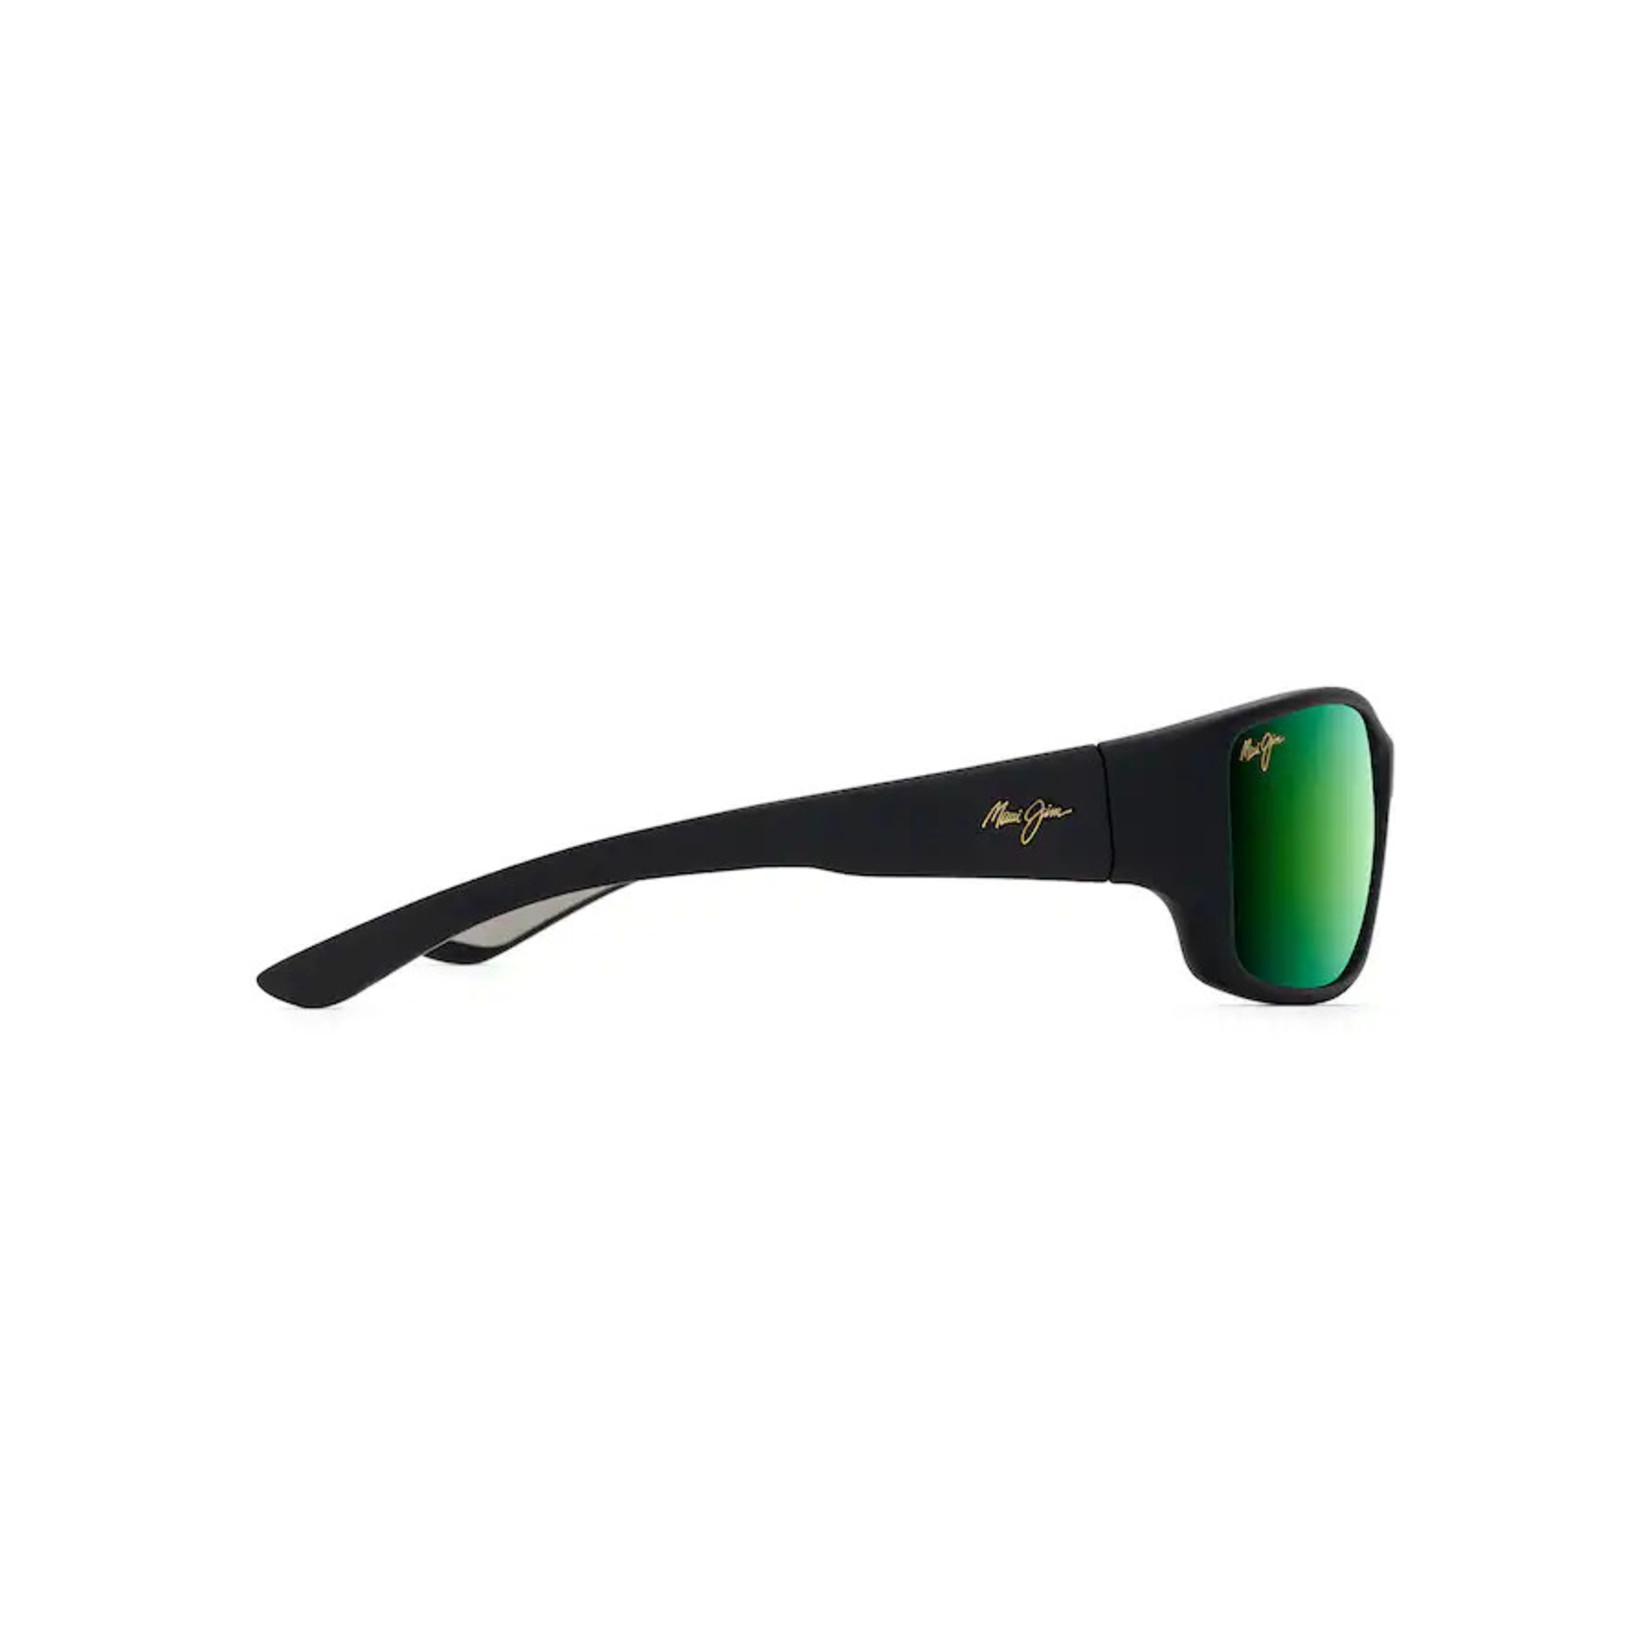 Maui Jim Local Kine Polarized Sunglasses in Black and Transparent Green